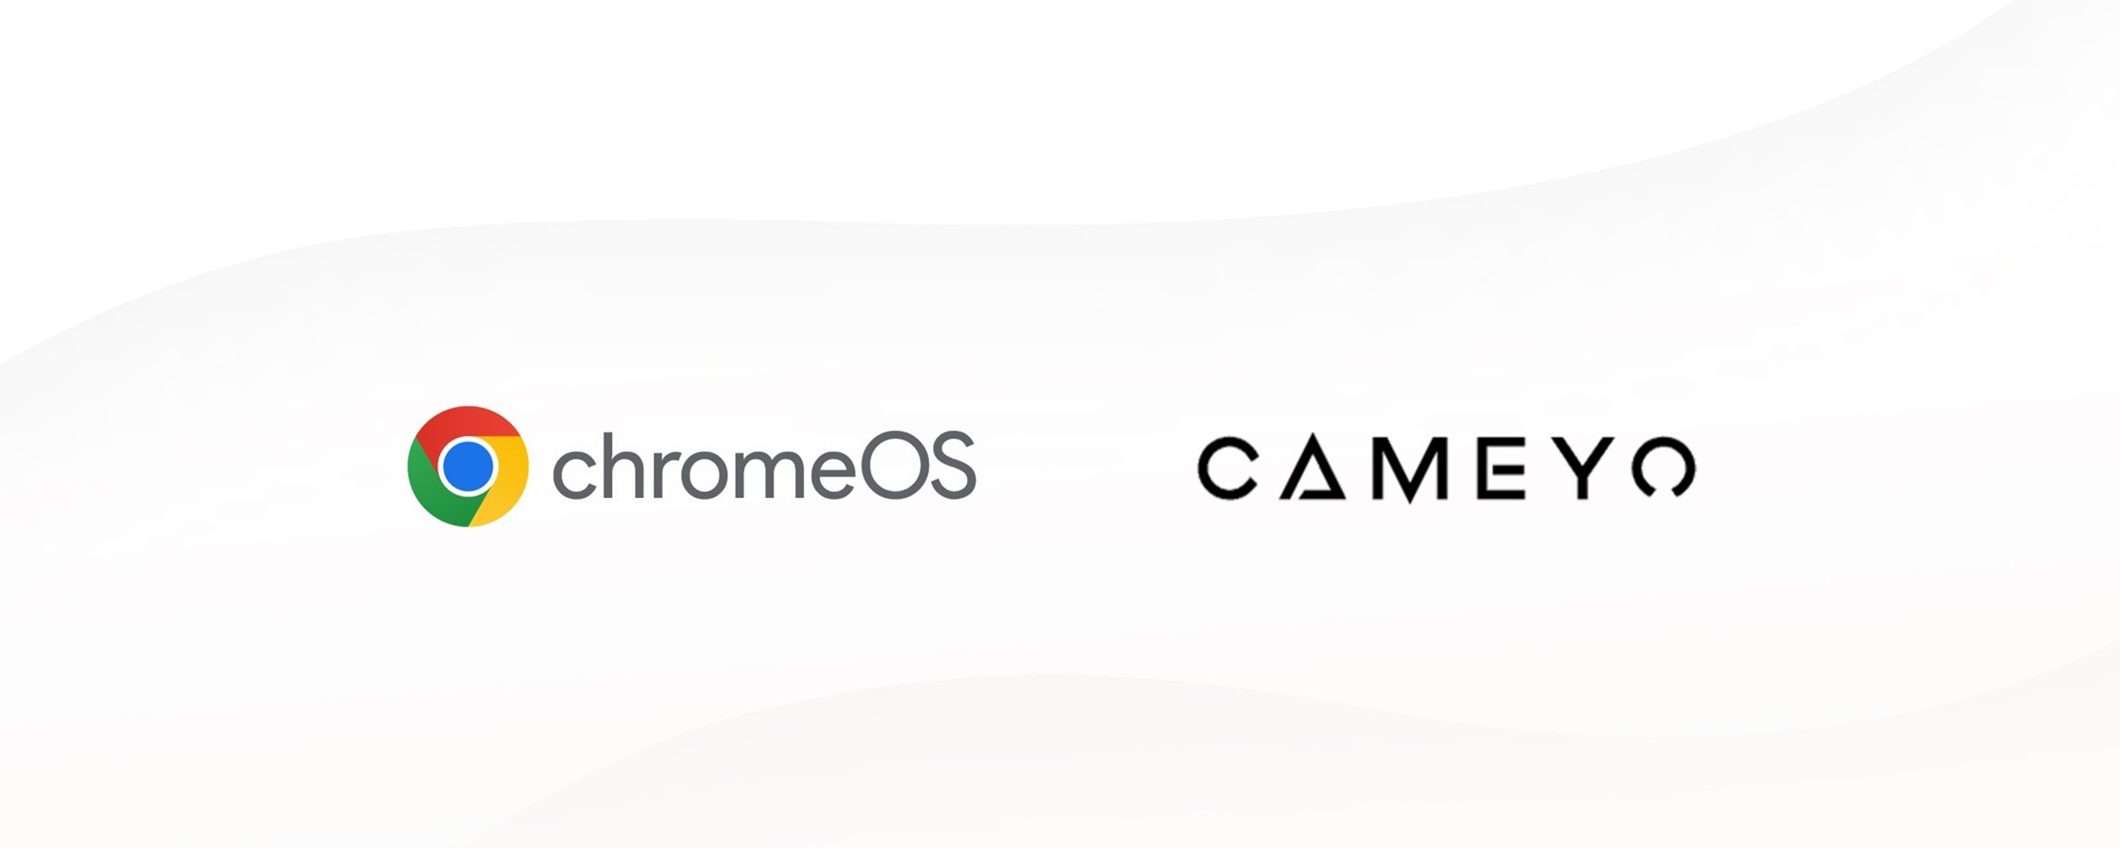 Google porta le app Windows su ChromeOS grazie a Cameyo